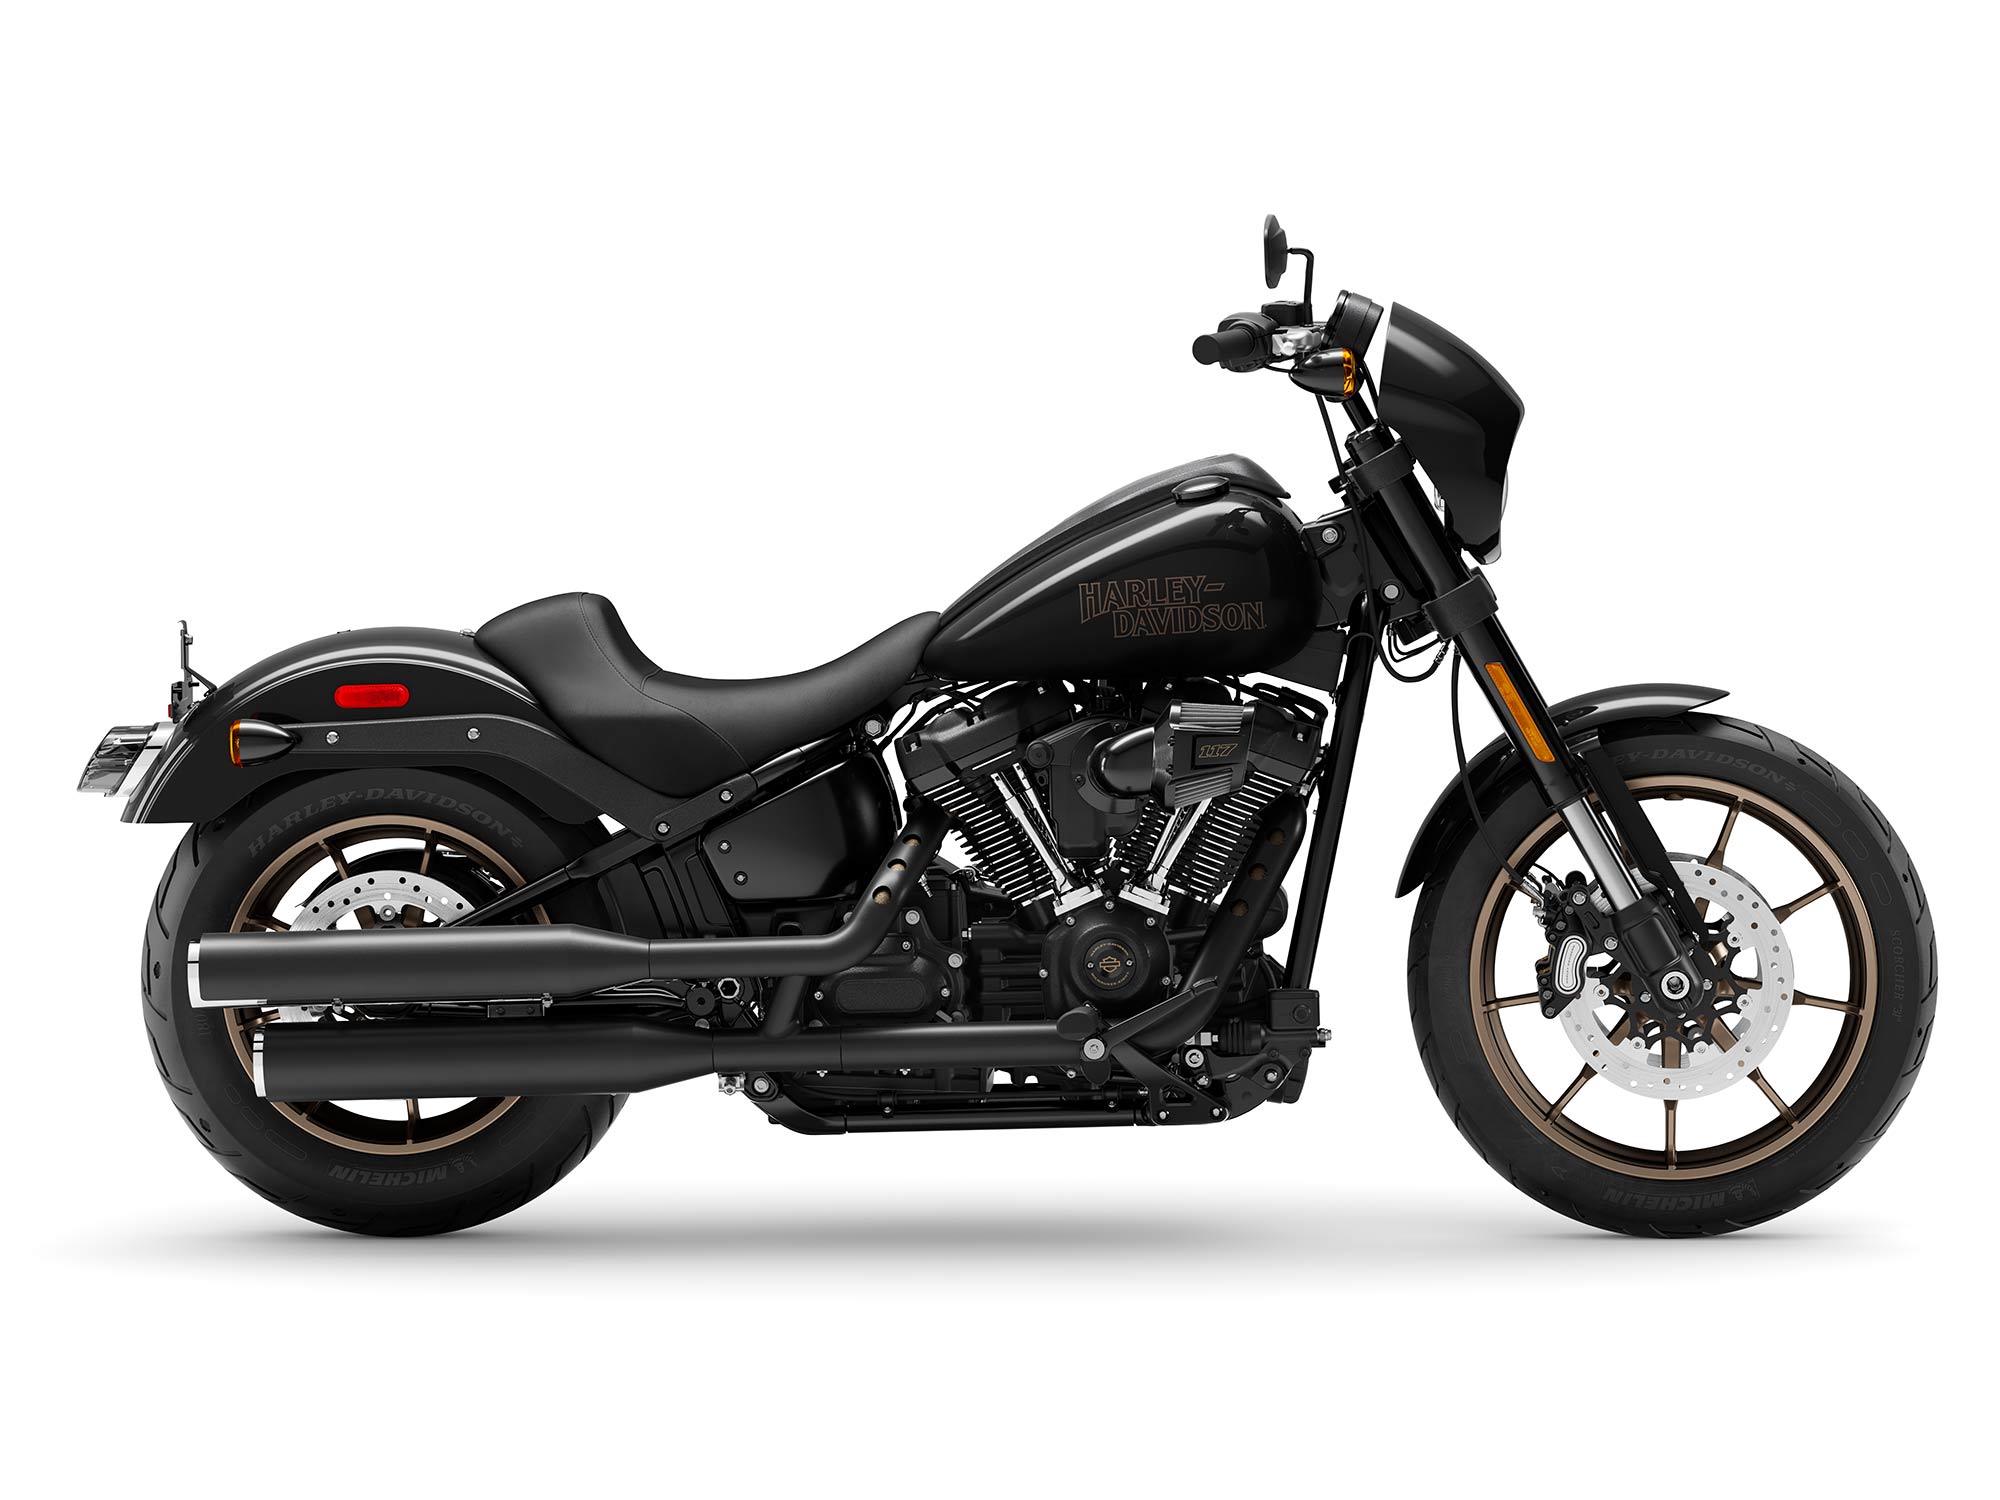 2020 Harley-Davidson Sportster Iron 883 Buyer's Guide: Specs